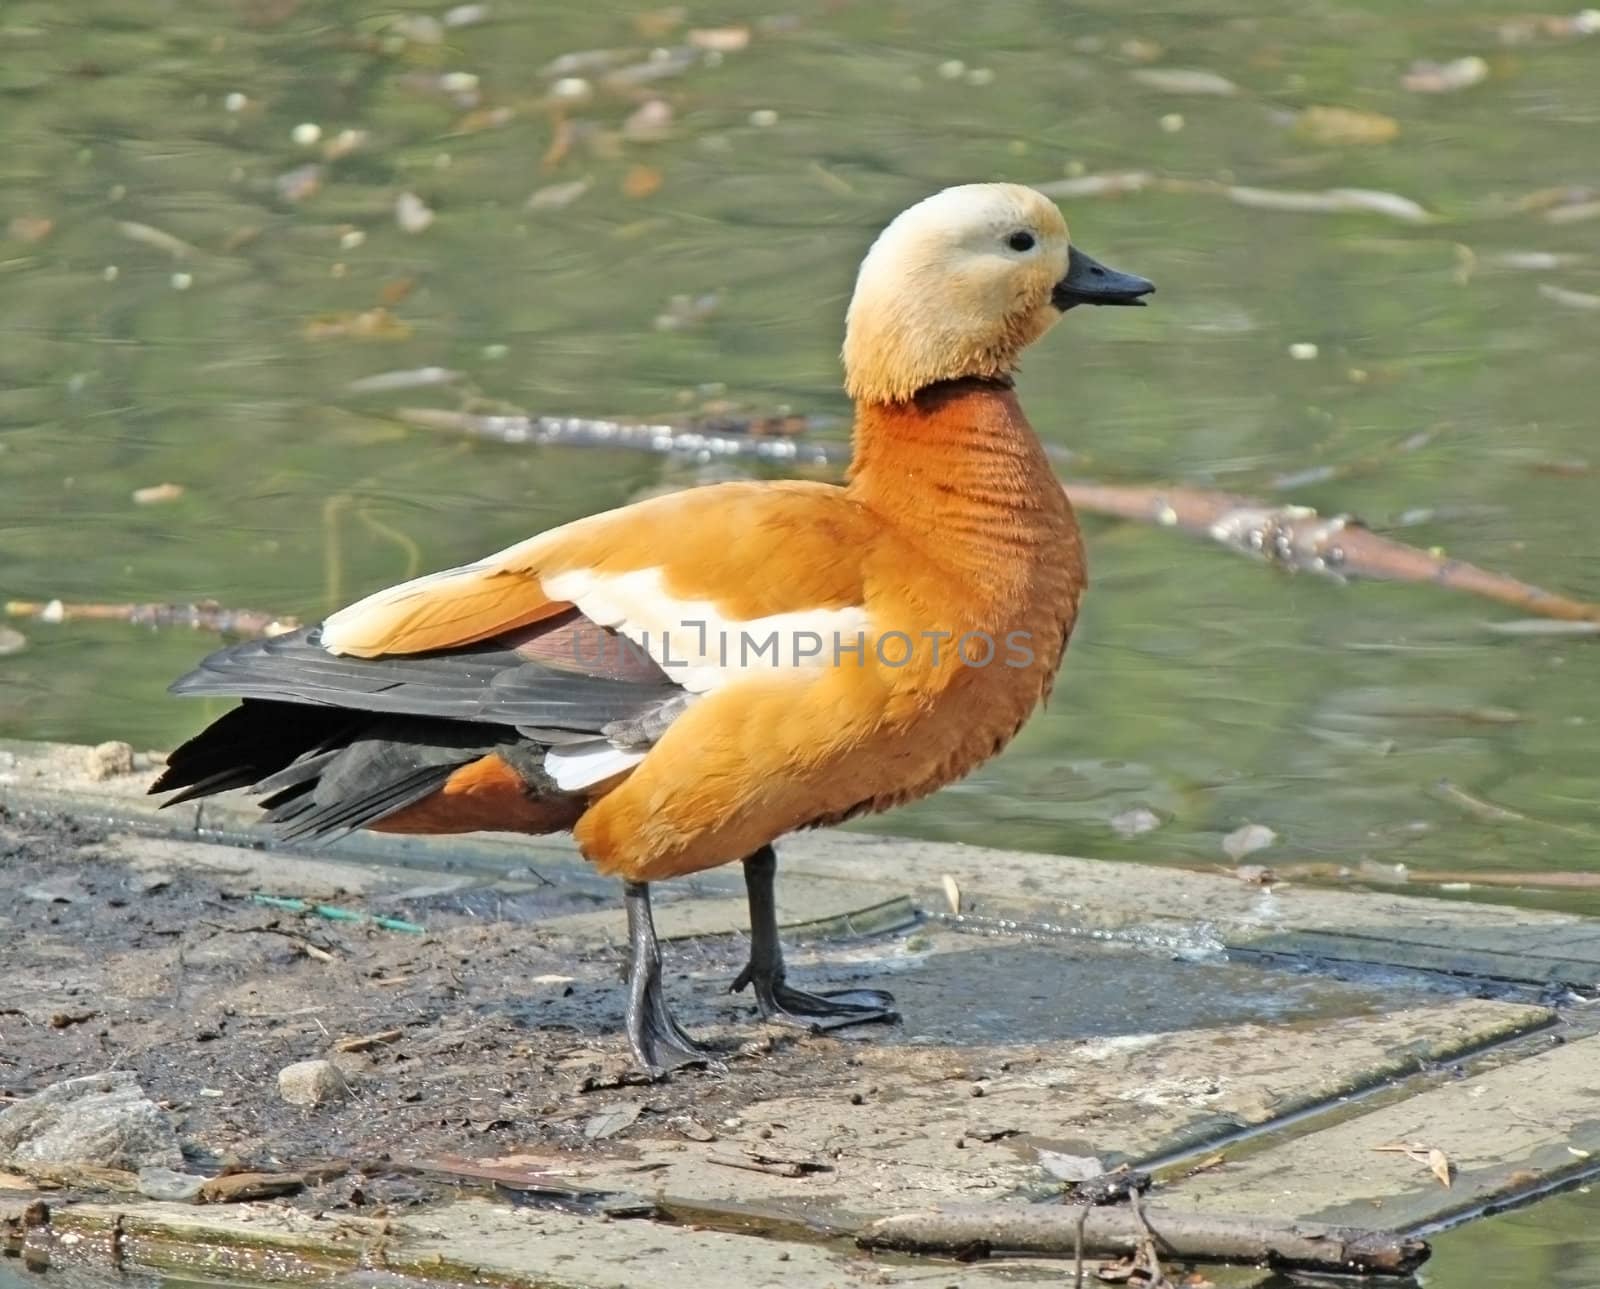 Orange duck is quacking on the pool